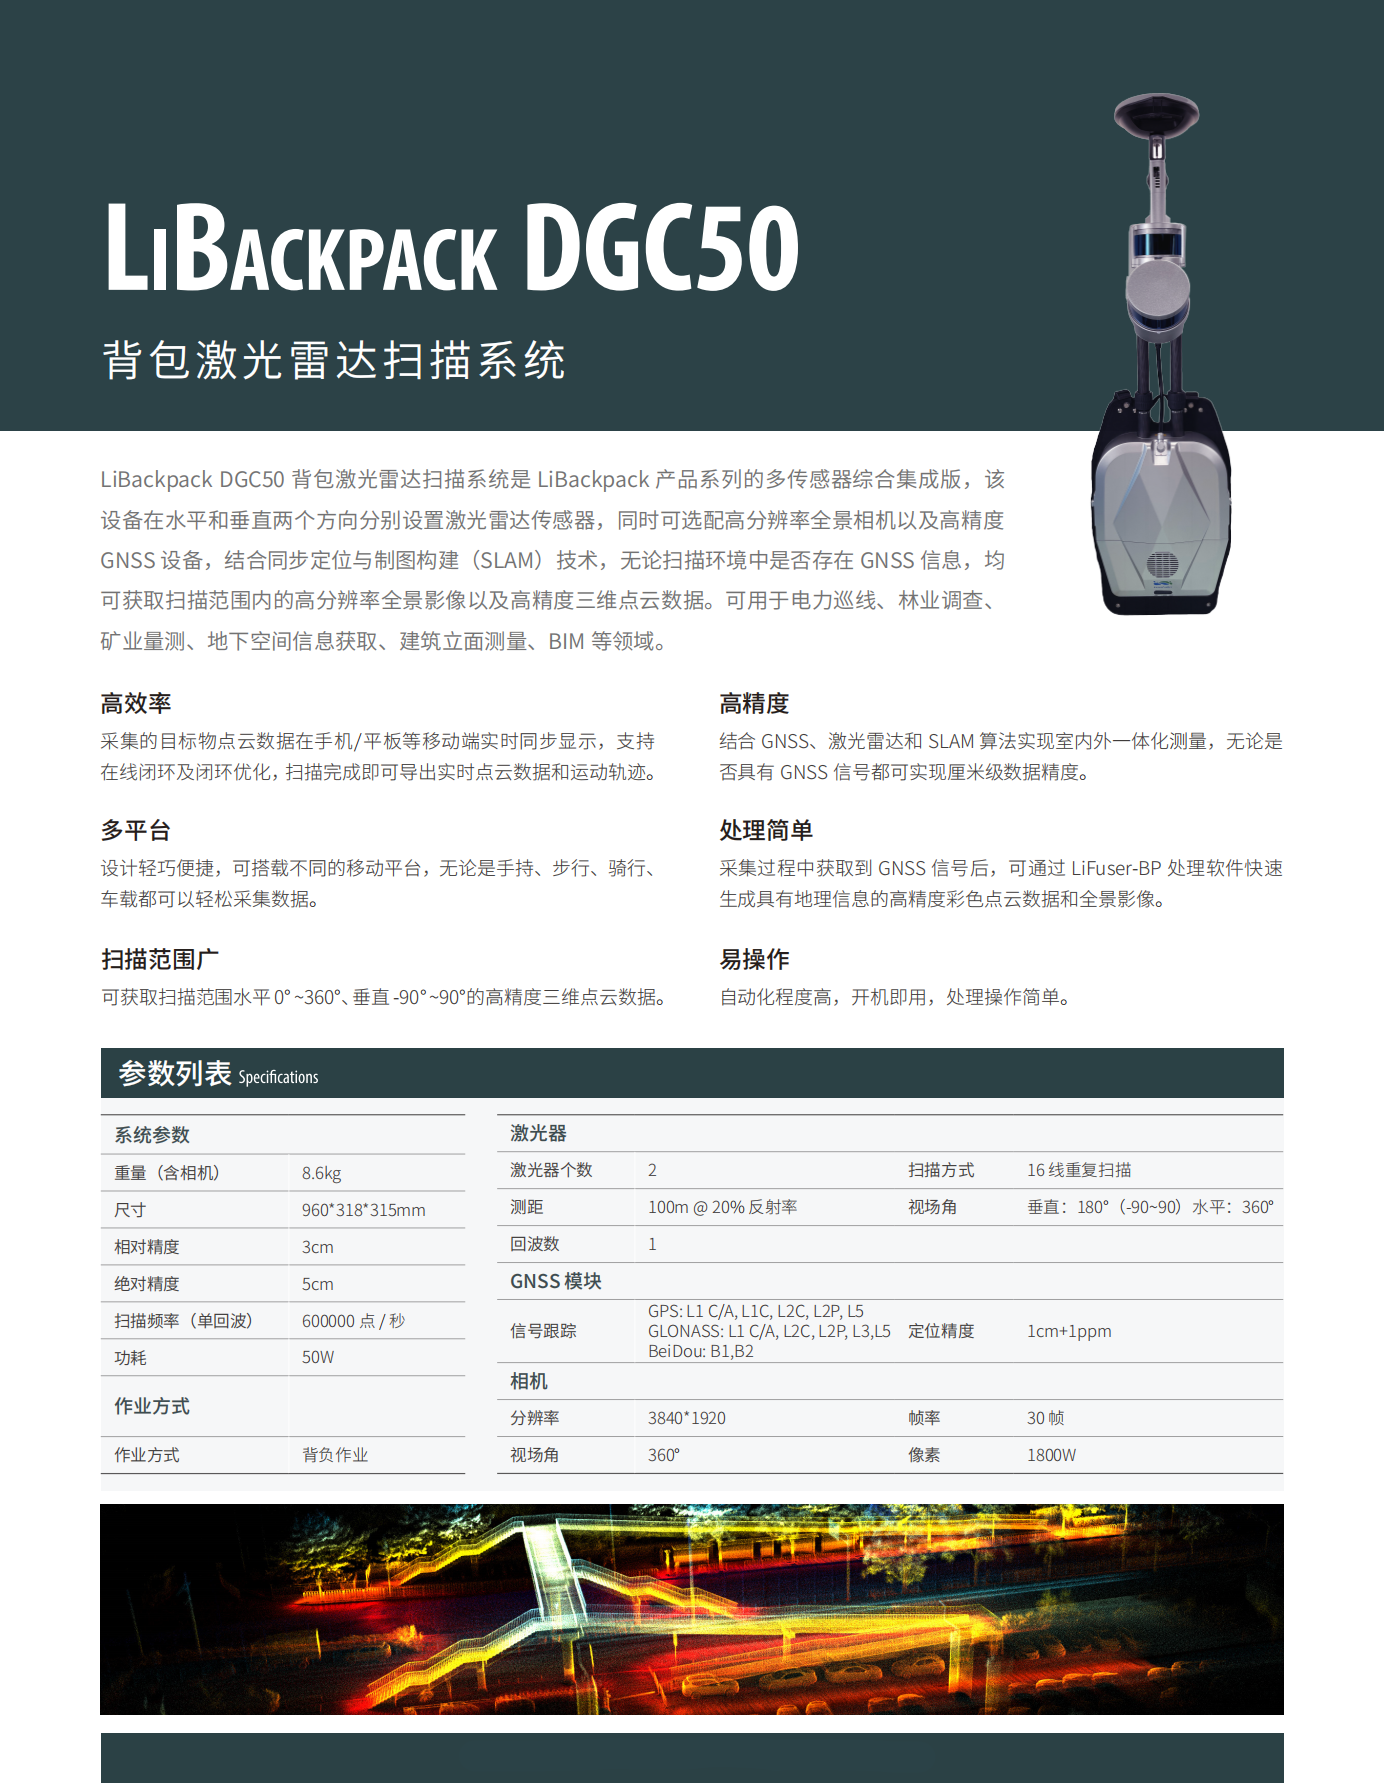 LiBackpack-DGC50-背包激光雷达扫描系统202202_00.png